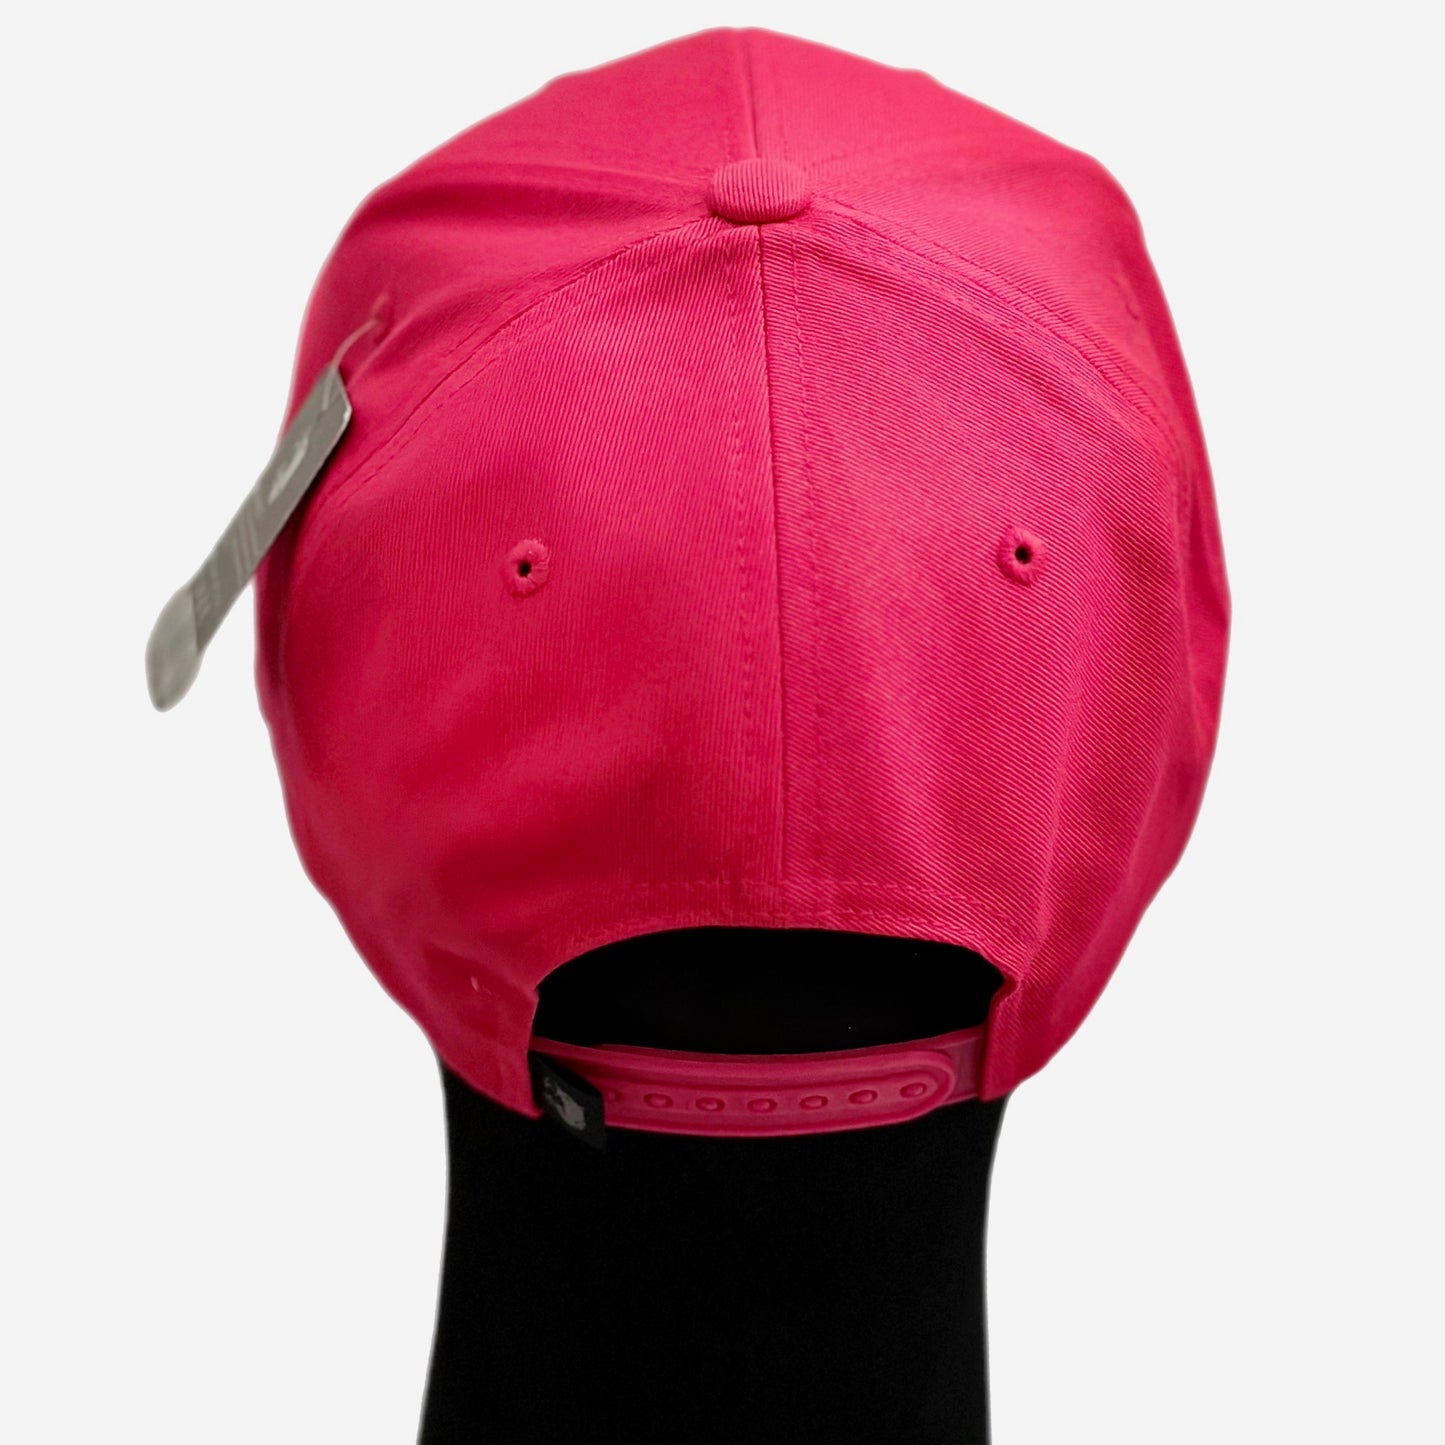 Hot Pink Snap Back "Gabby B" Hat